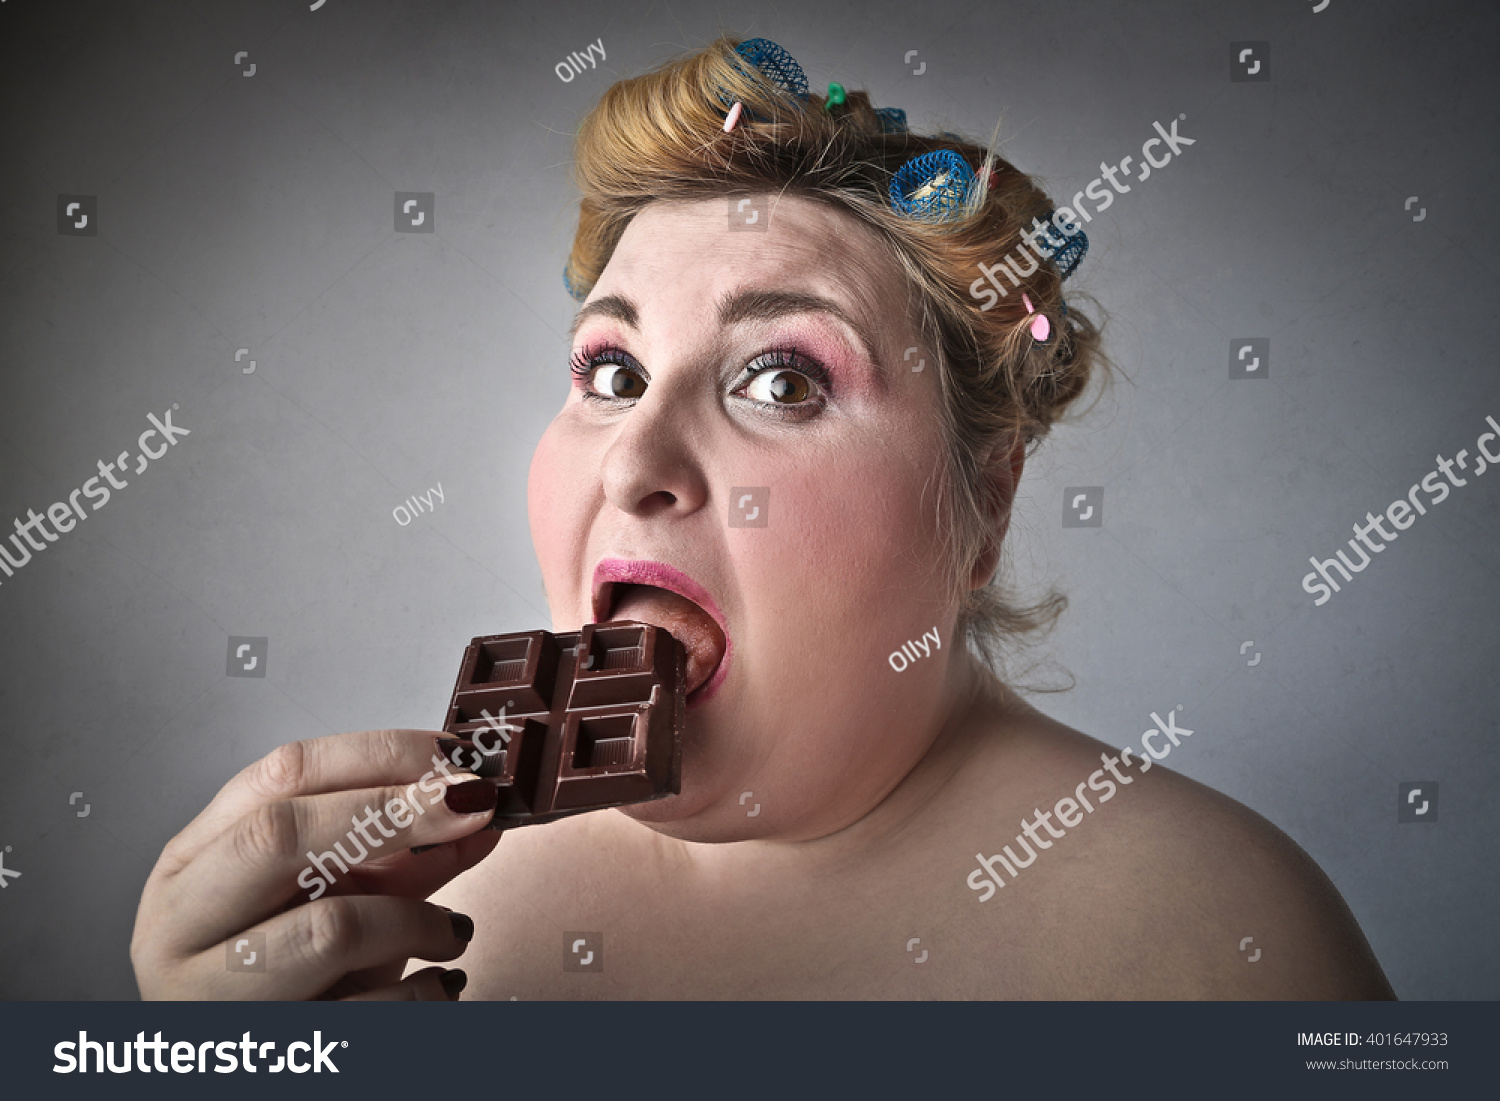 stock-photo-chubby-woman-eating-chocolate-401647933.jpg